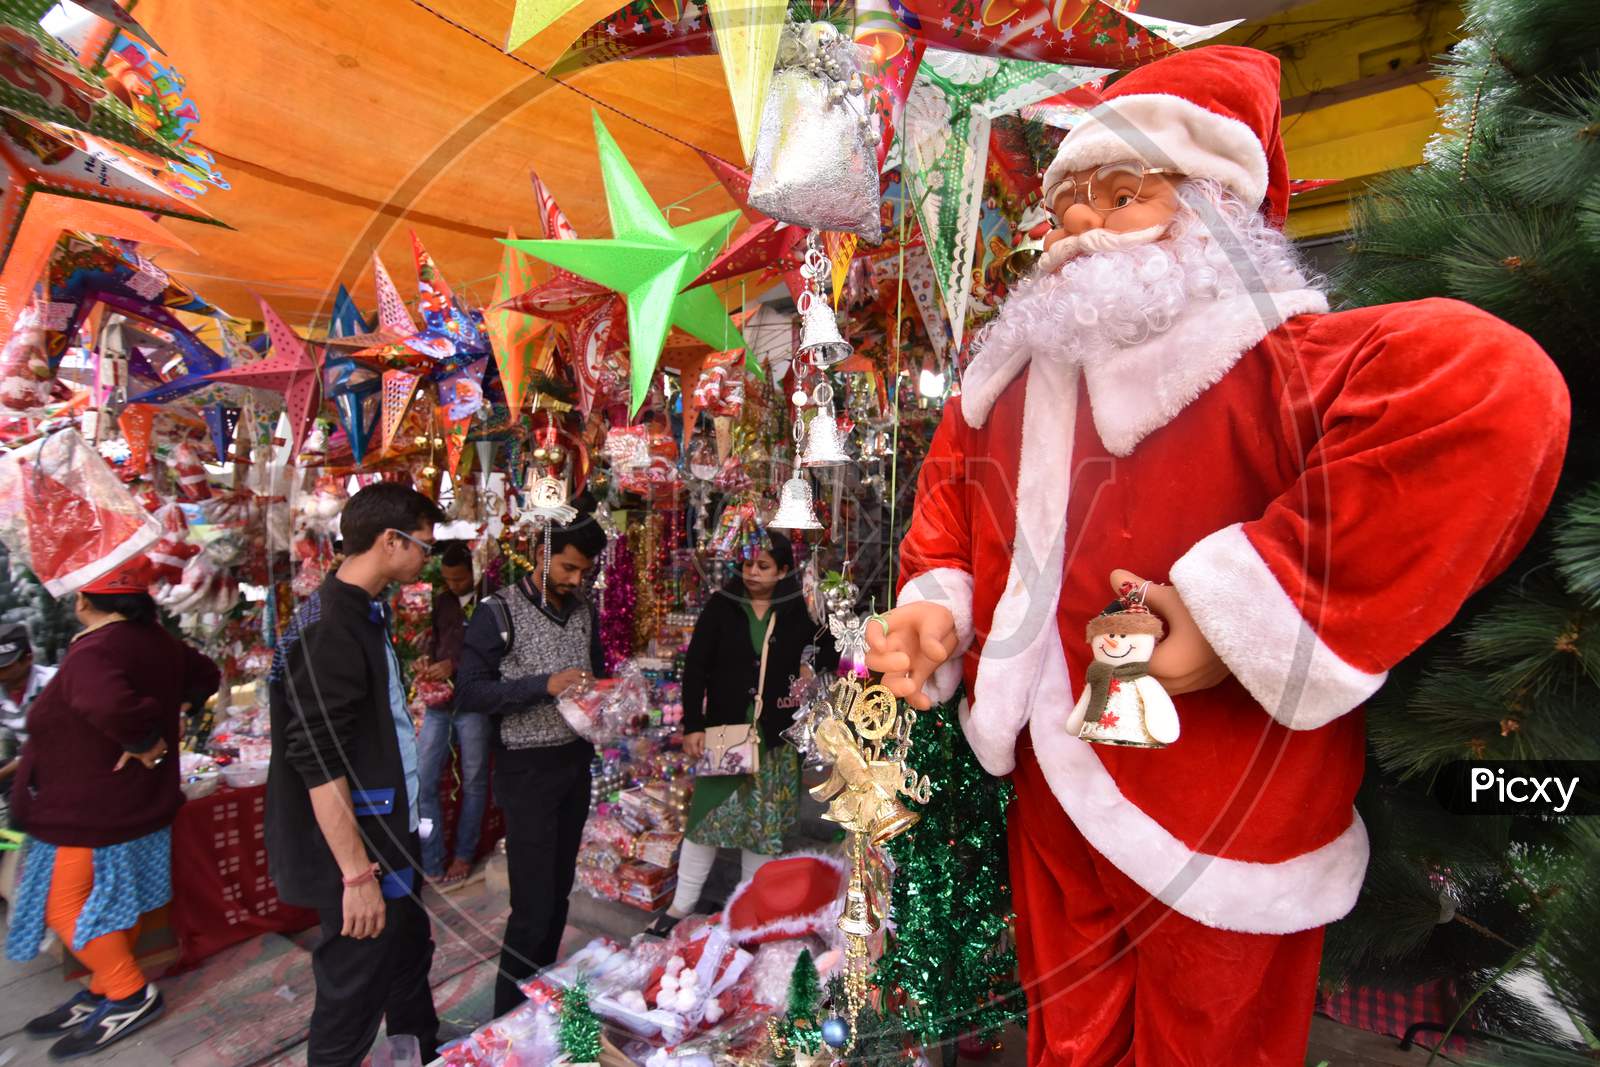 Christmas Decorative Articles In an Vendor Store Or Shop in Giuwahati, Assam